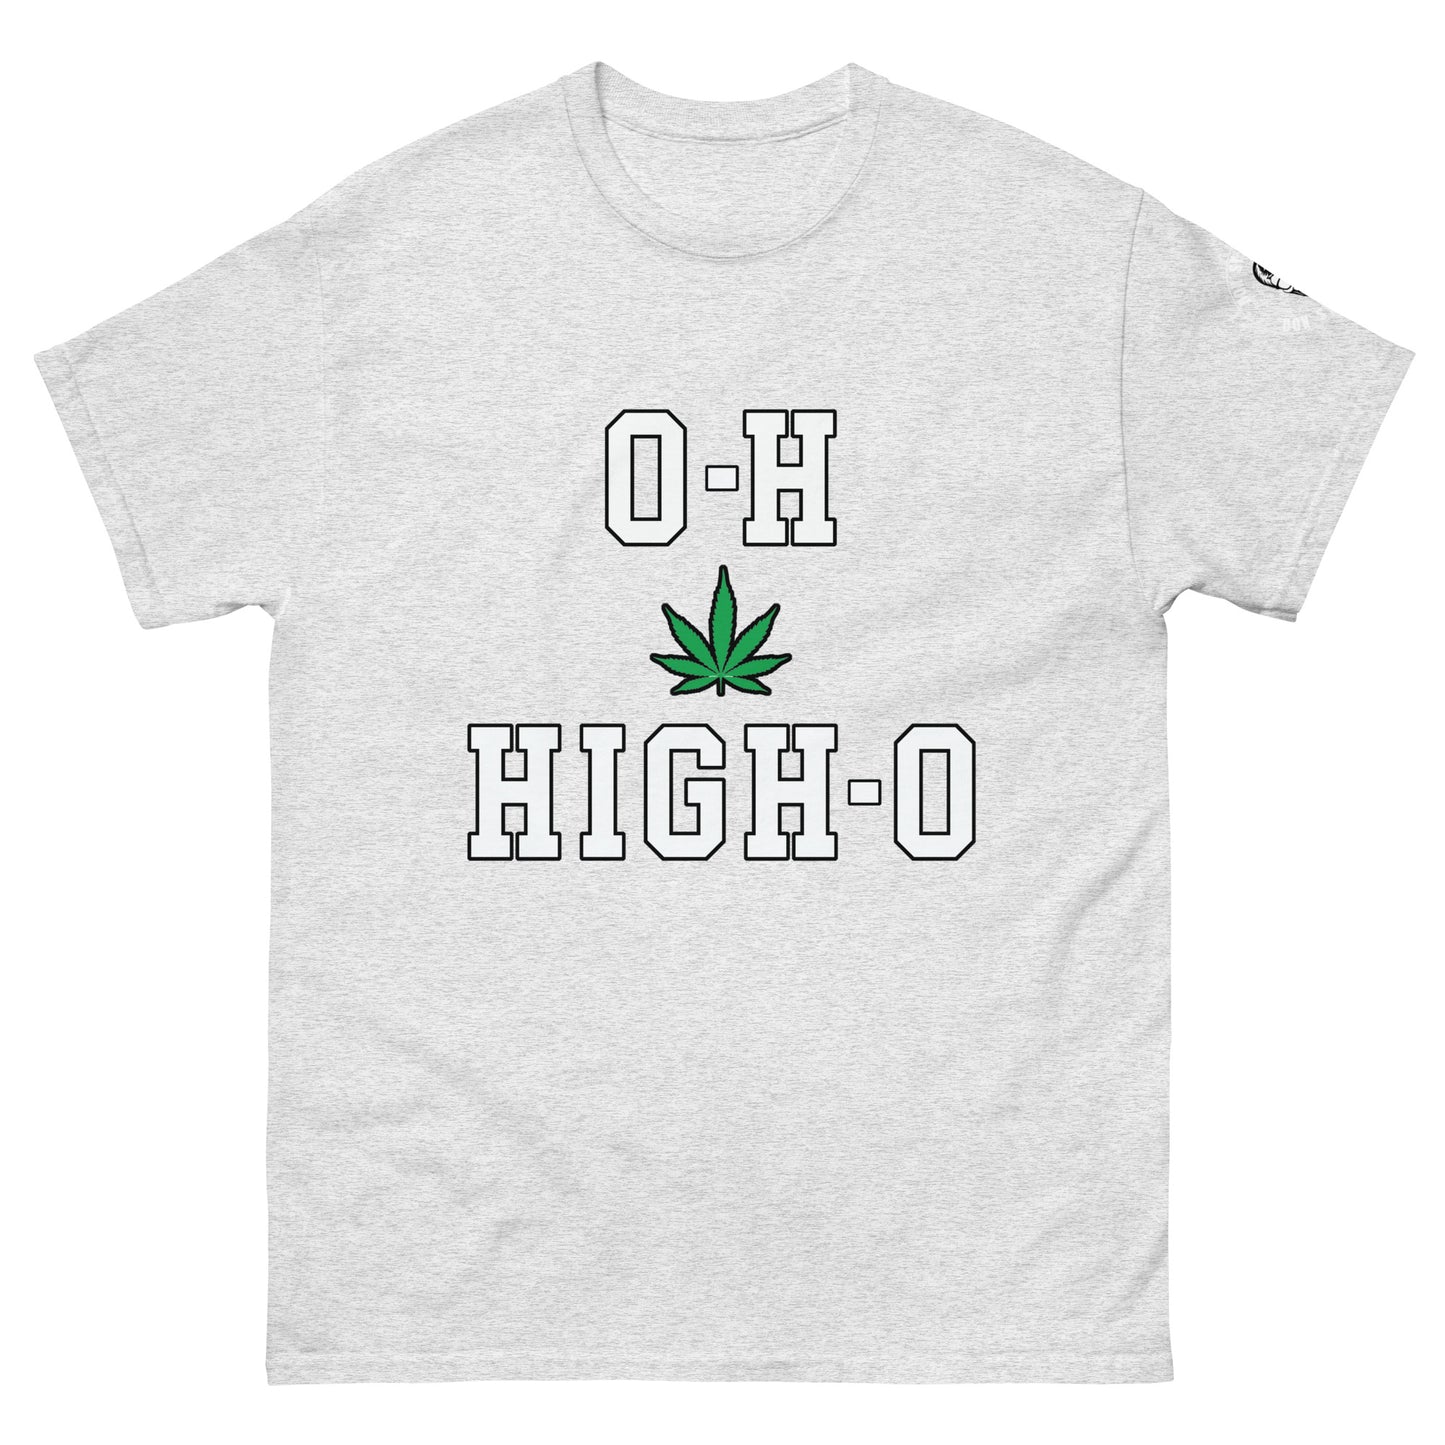 O-H HIGH-O Don Sy Men's classic tee